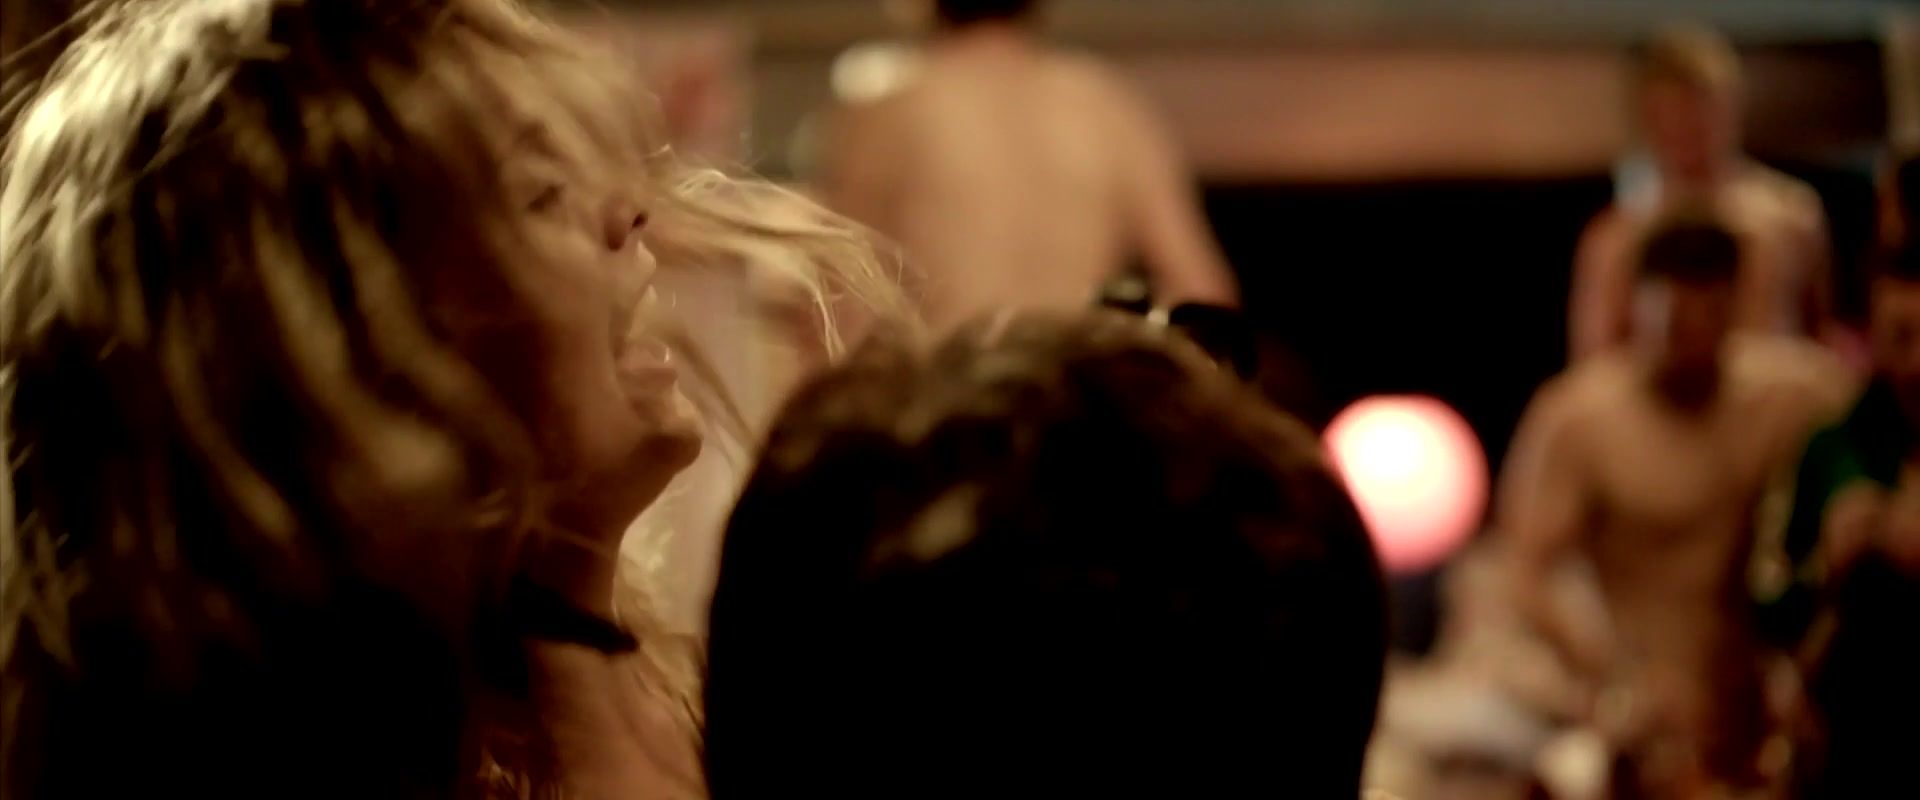 Milfsex Celebs Naked Scenes with Hot Rose McIver | The movie "Blinder" | released in 2013 Kathia Nobili